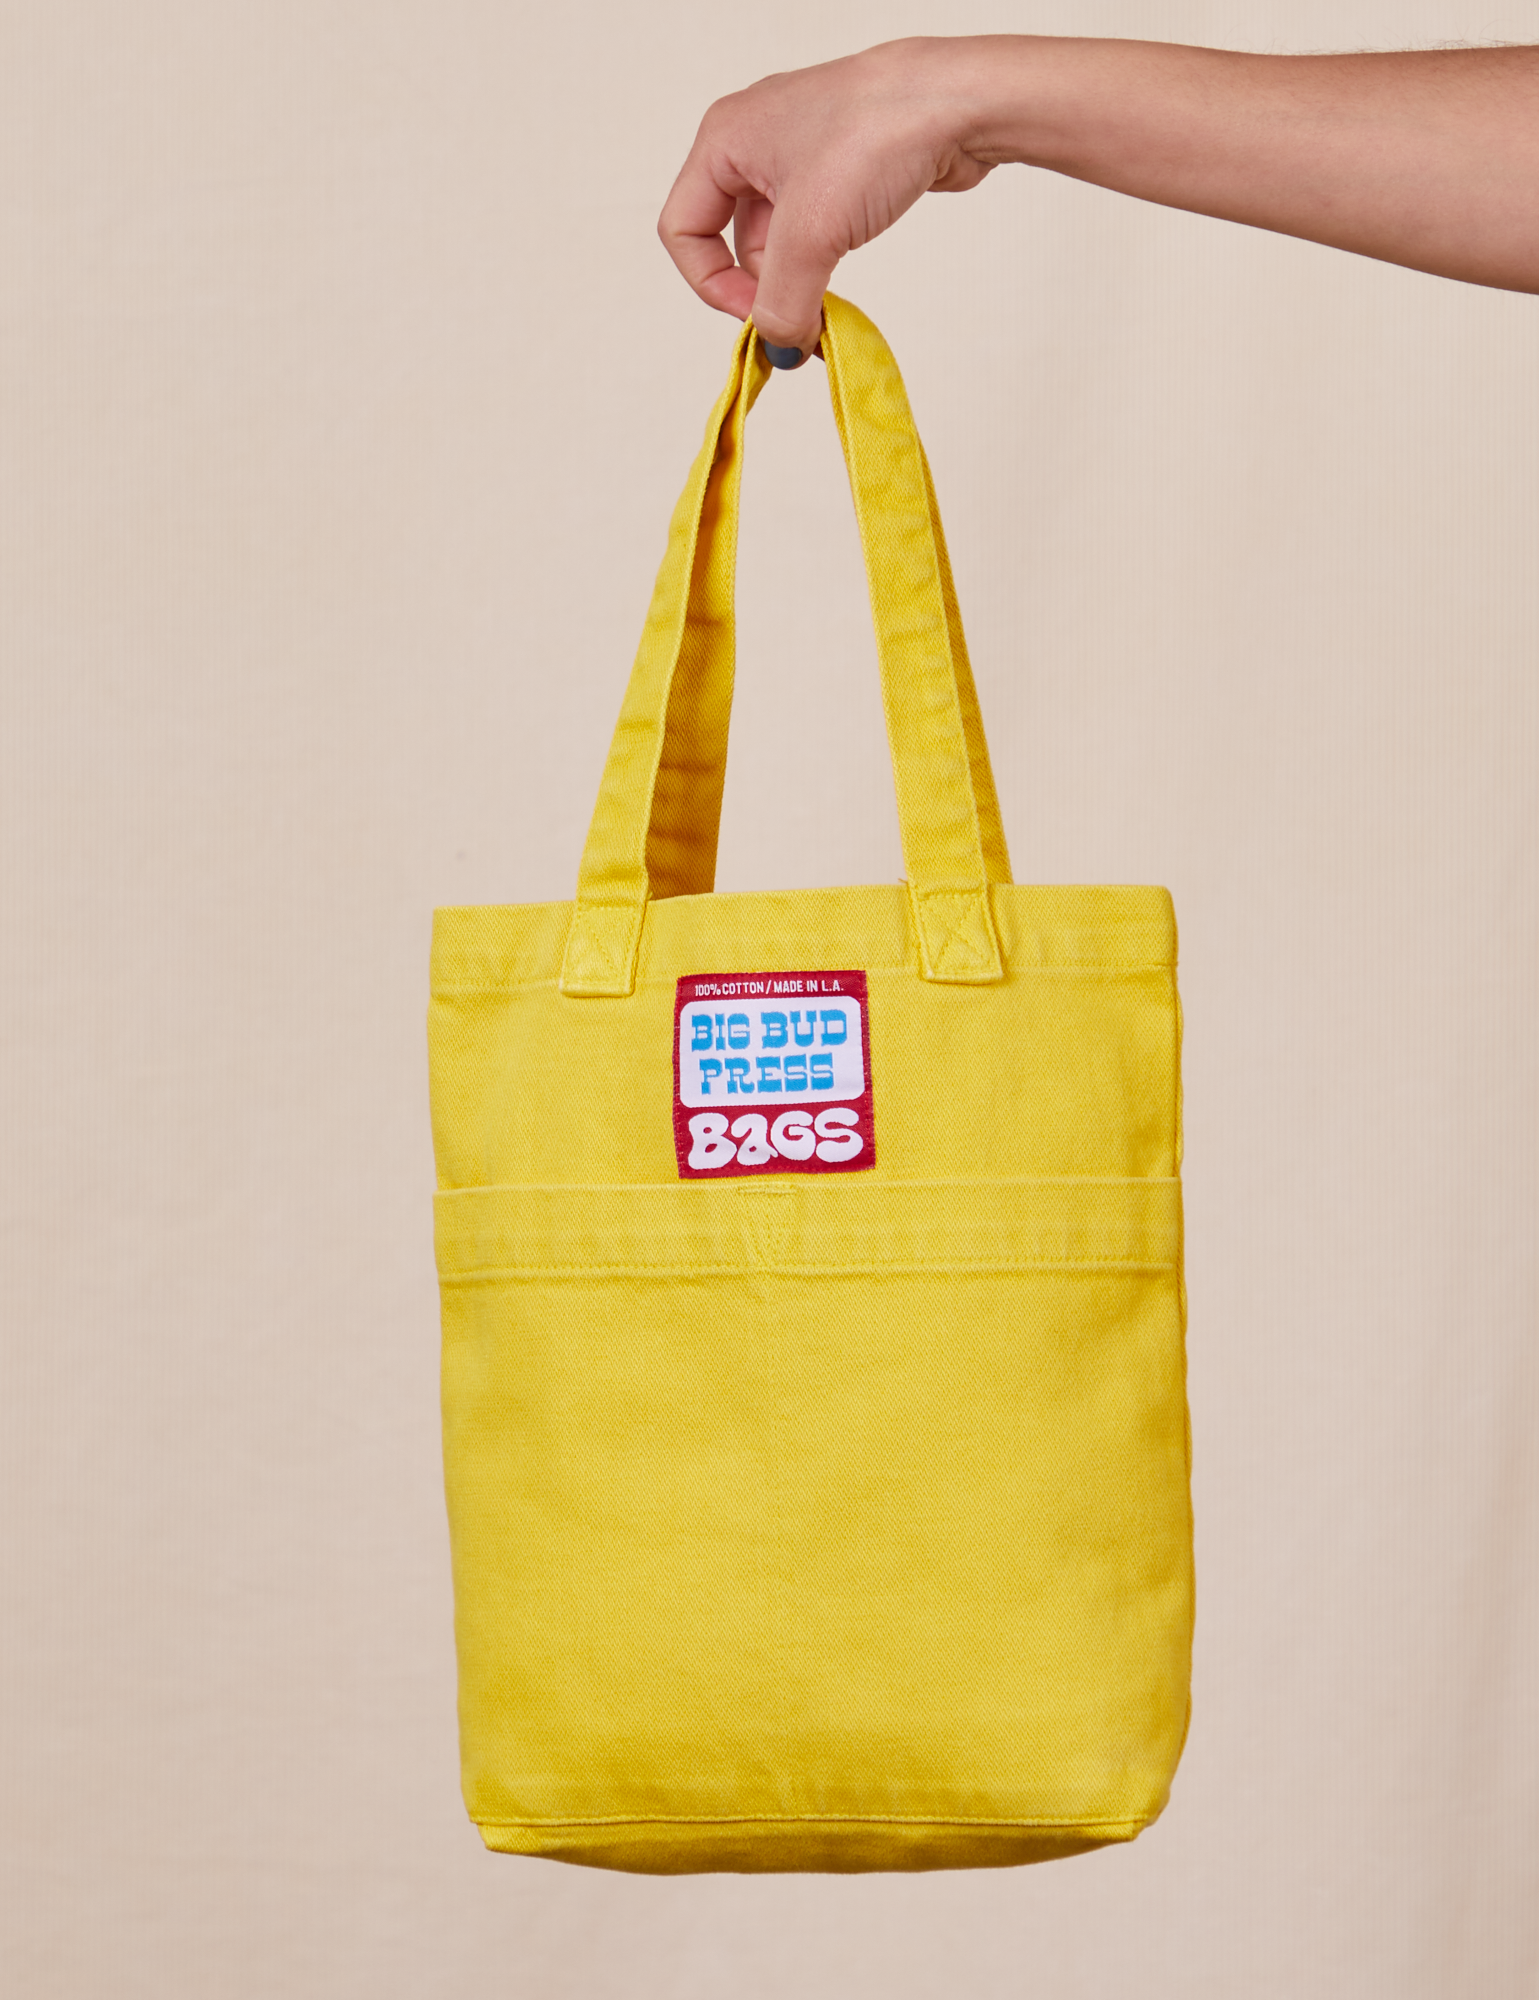 Mini Tote Bags in Golden Yellow